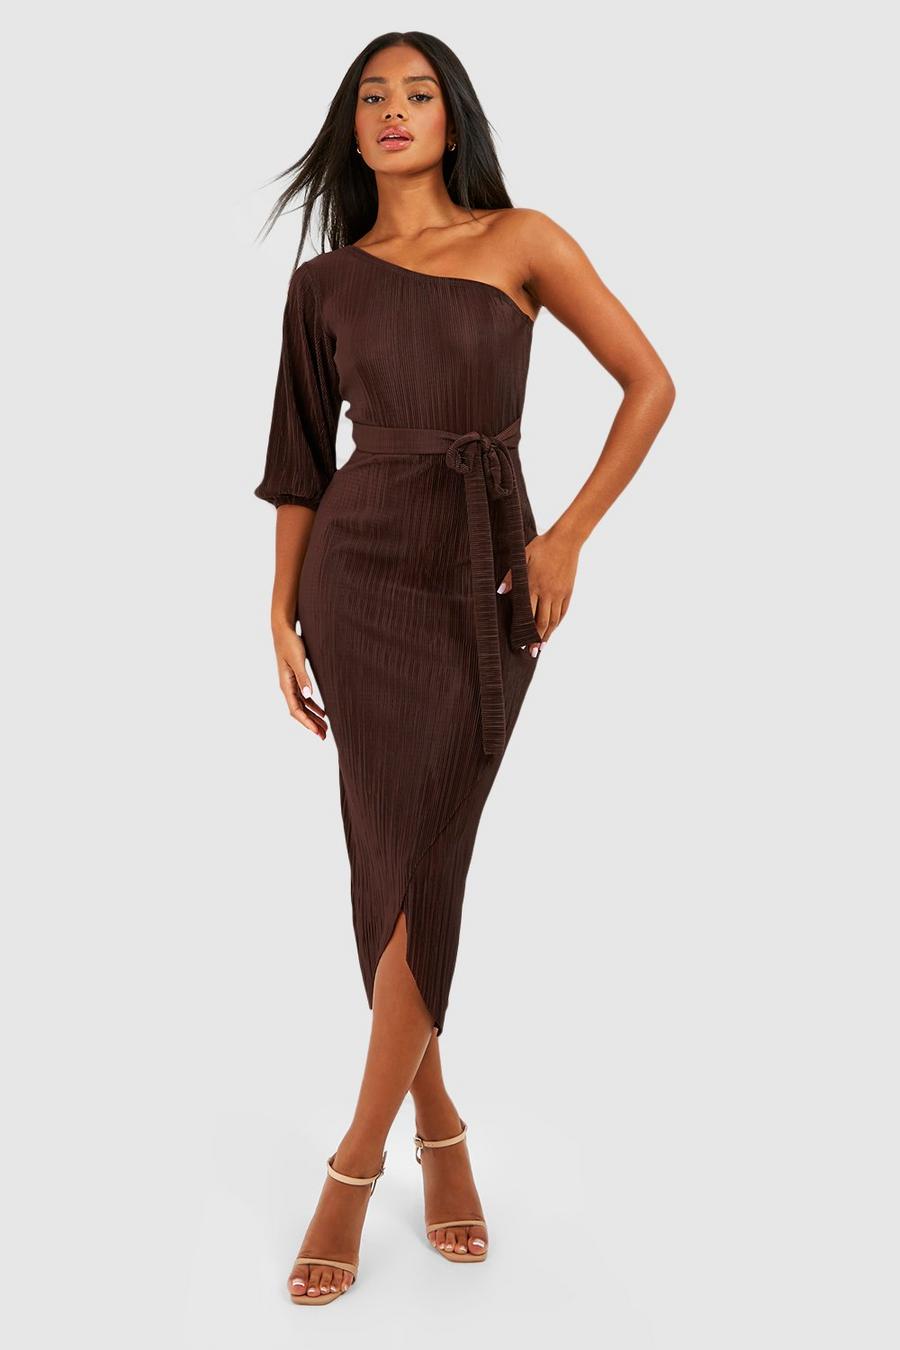 Chocolate marron One Shoulder Tie Waist Midiaxi Bodycon Dress